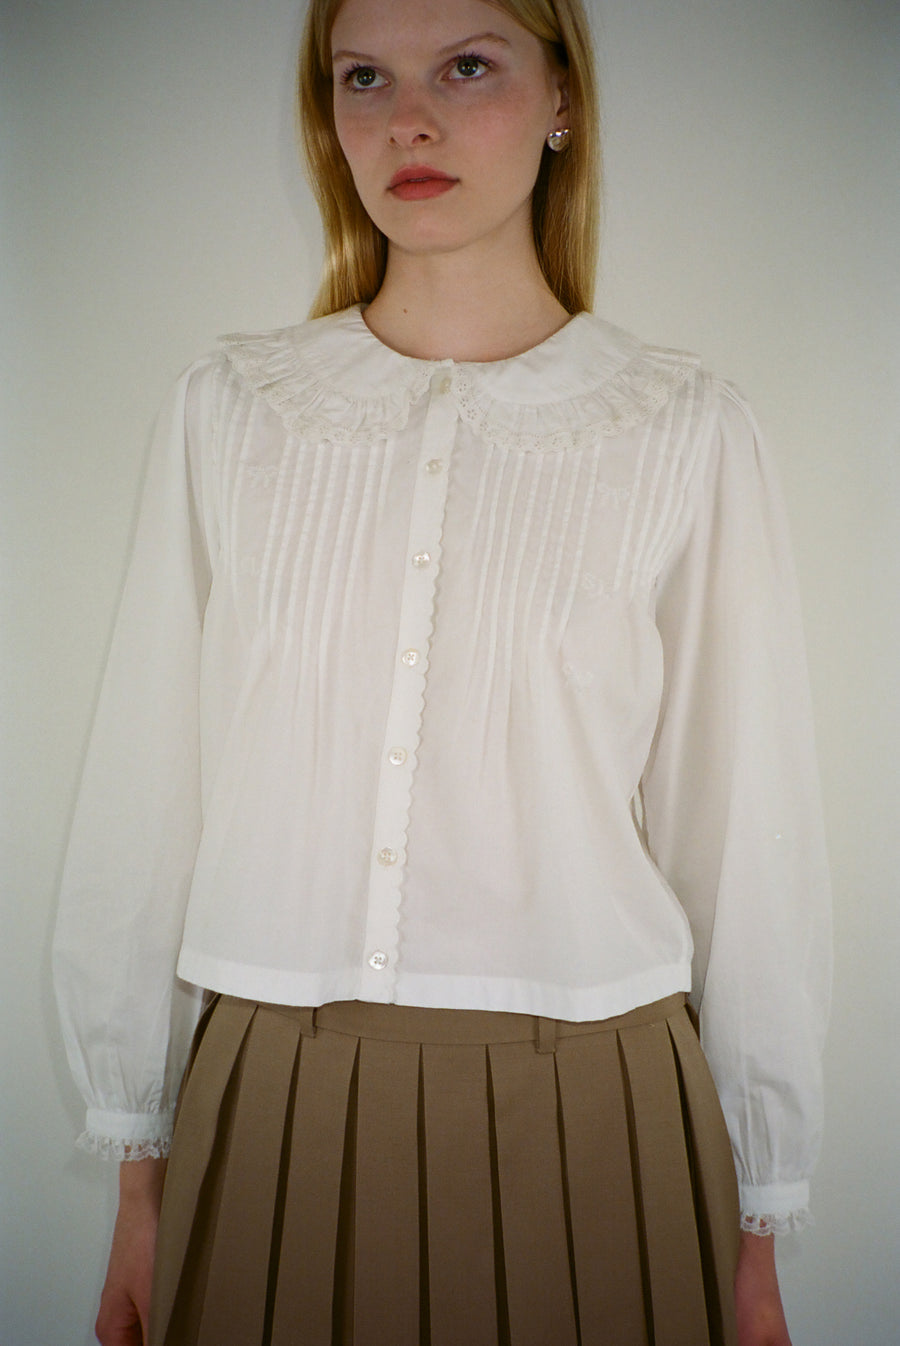 Long sleeved Cotton blouse in White on model